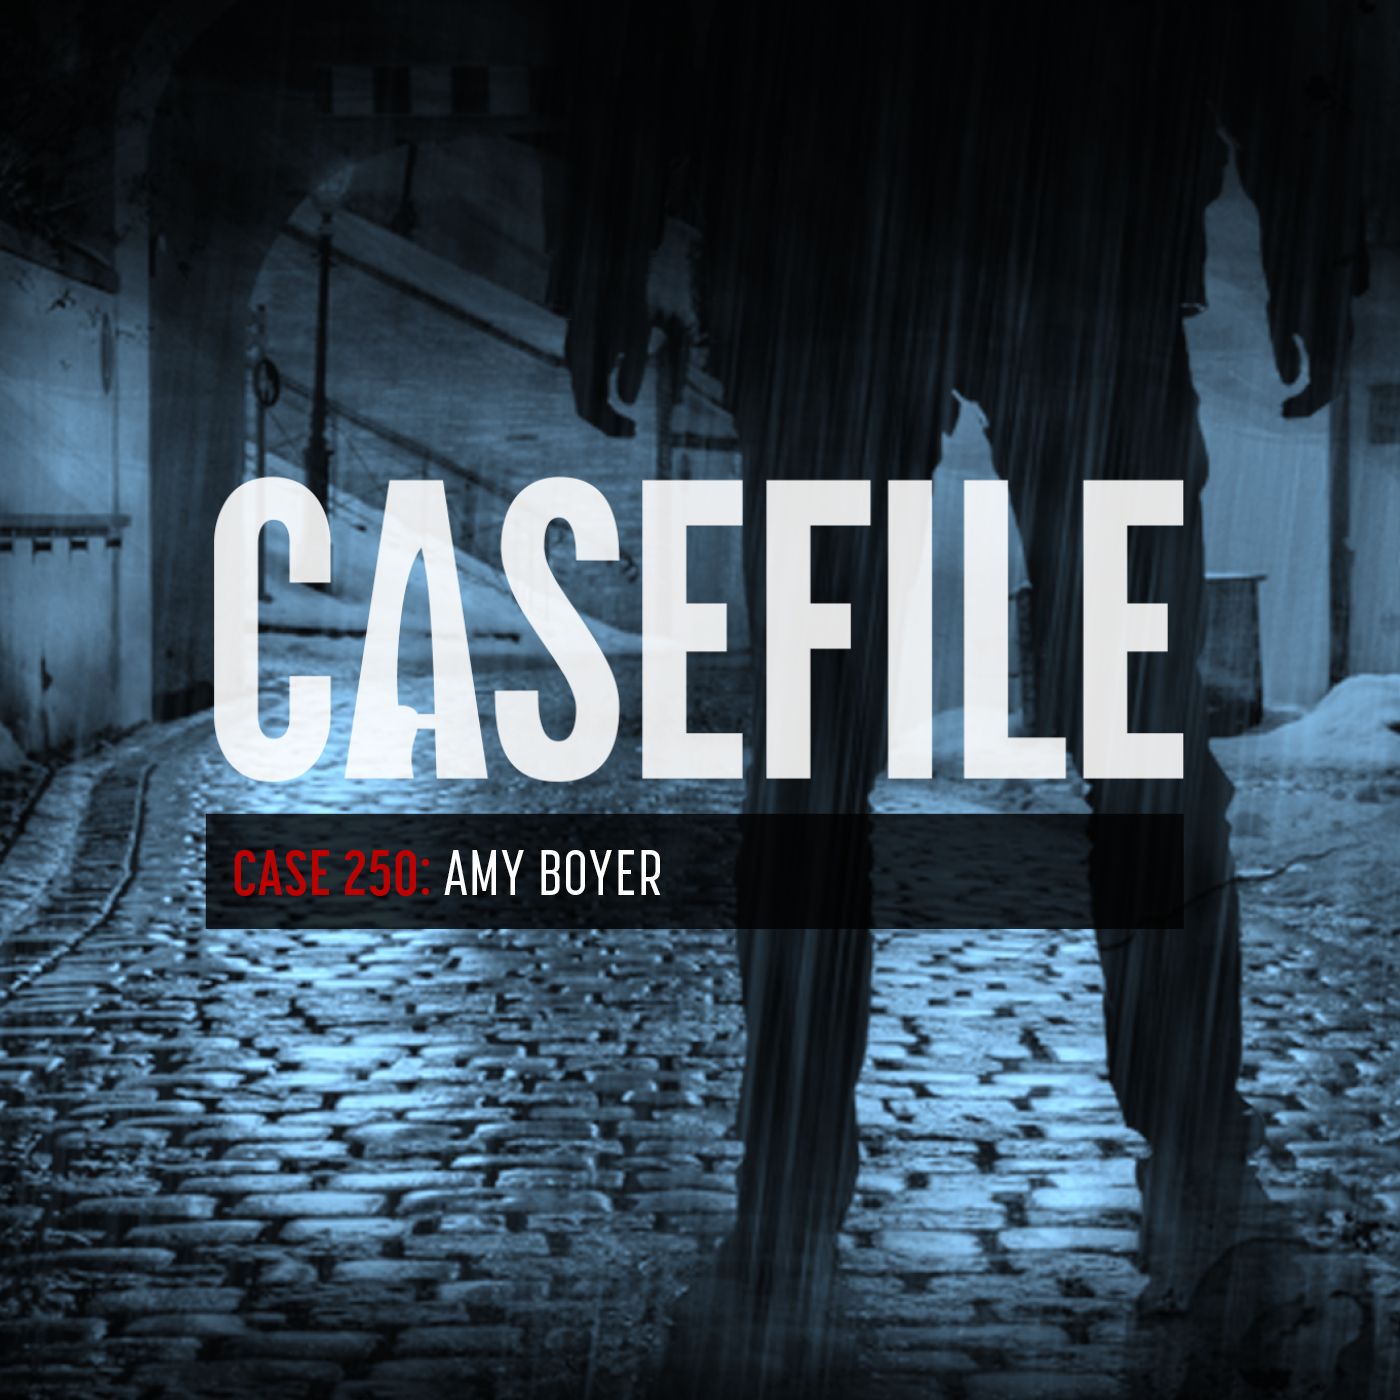 294: Case 250: Amy Boyer